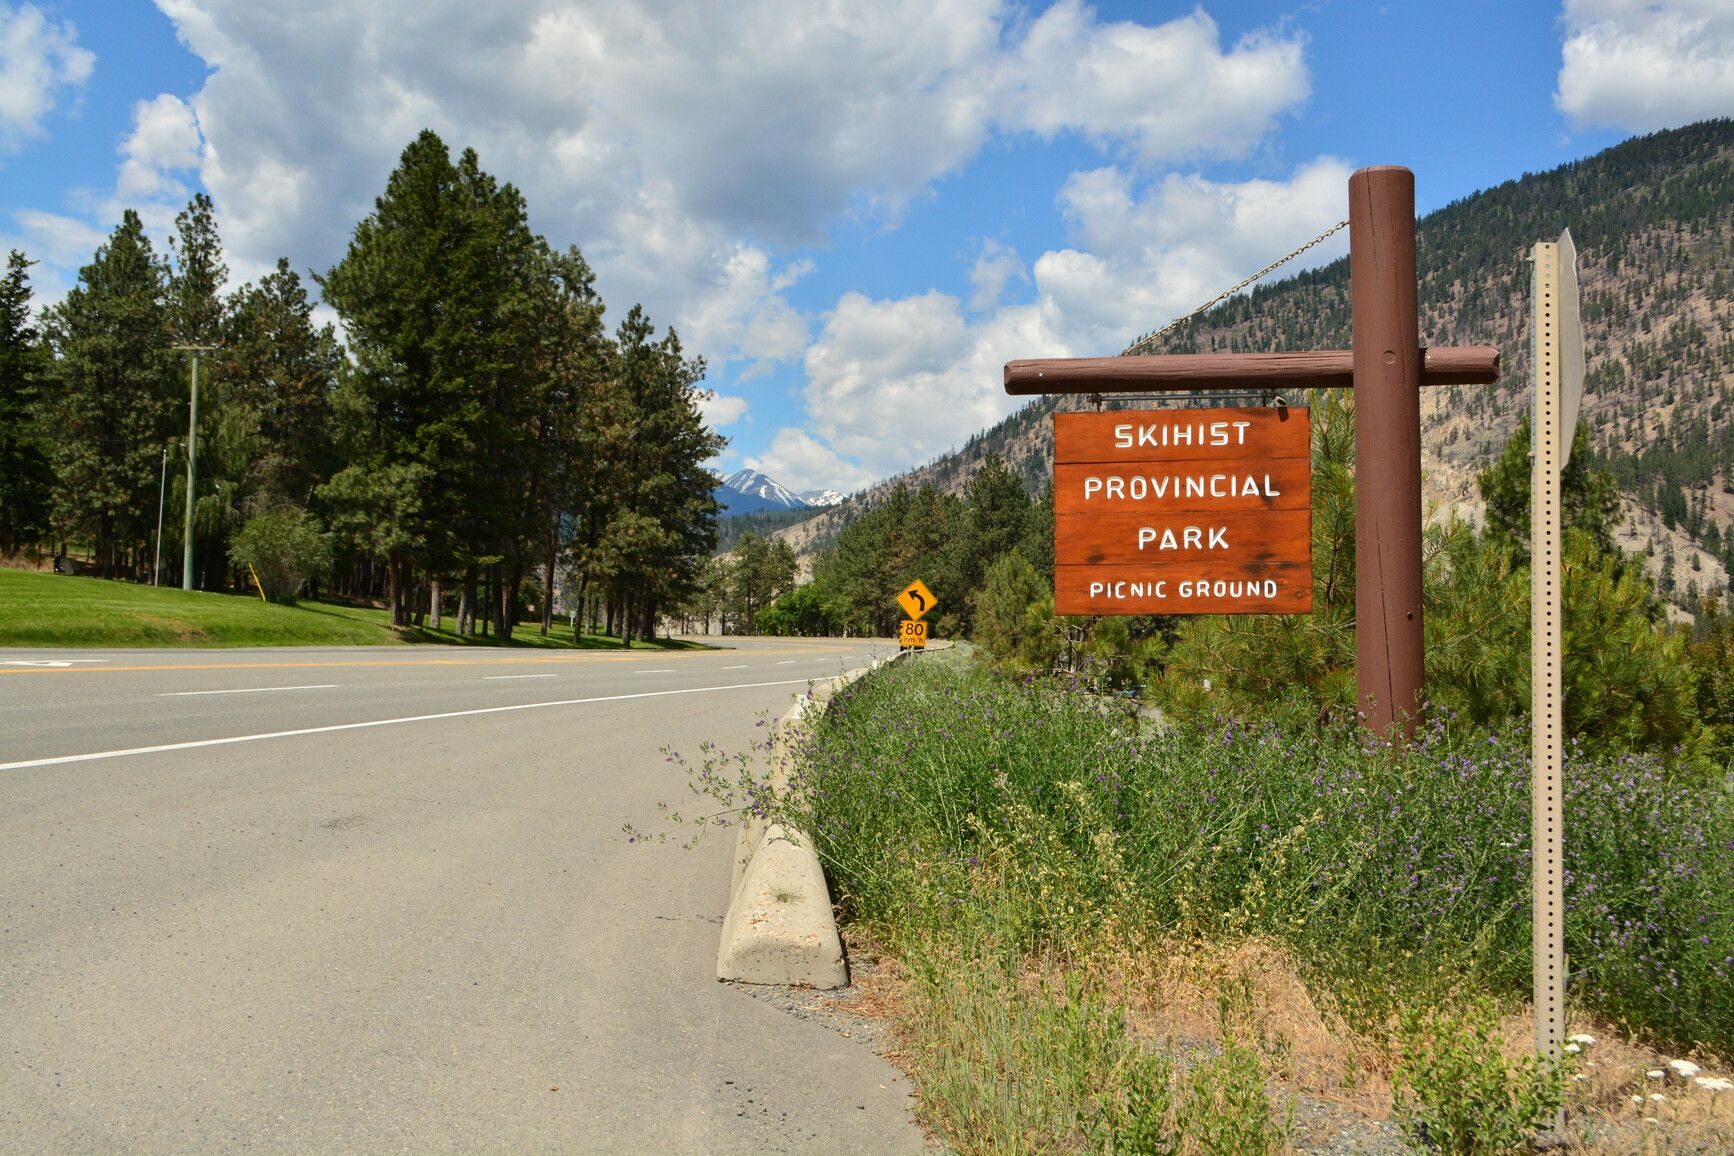 Entrance sign for Skihist Park picnic area.